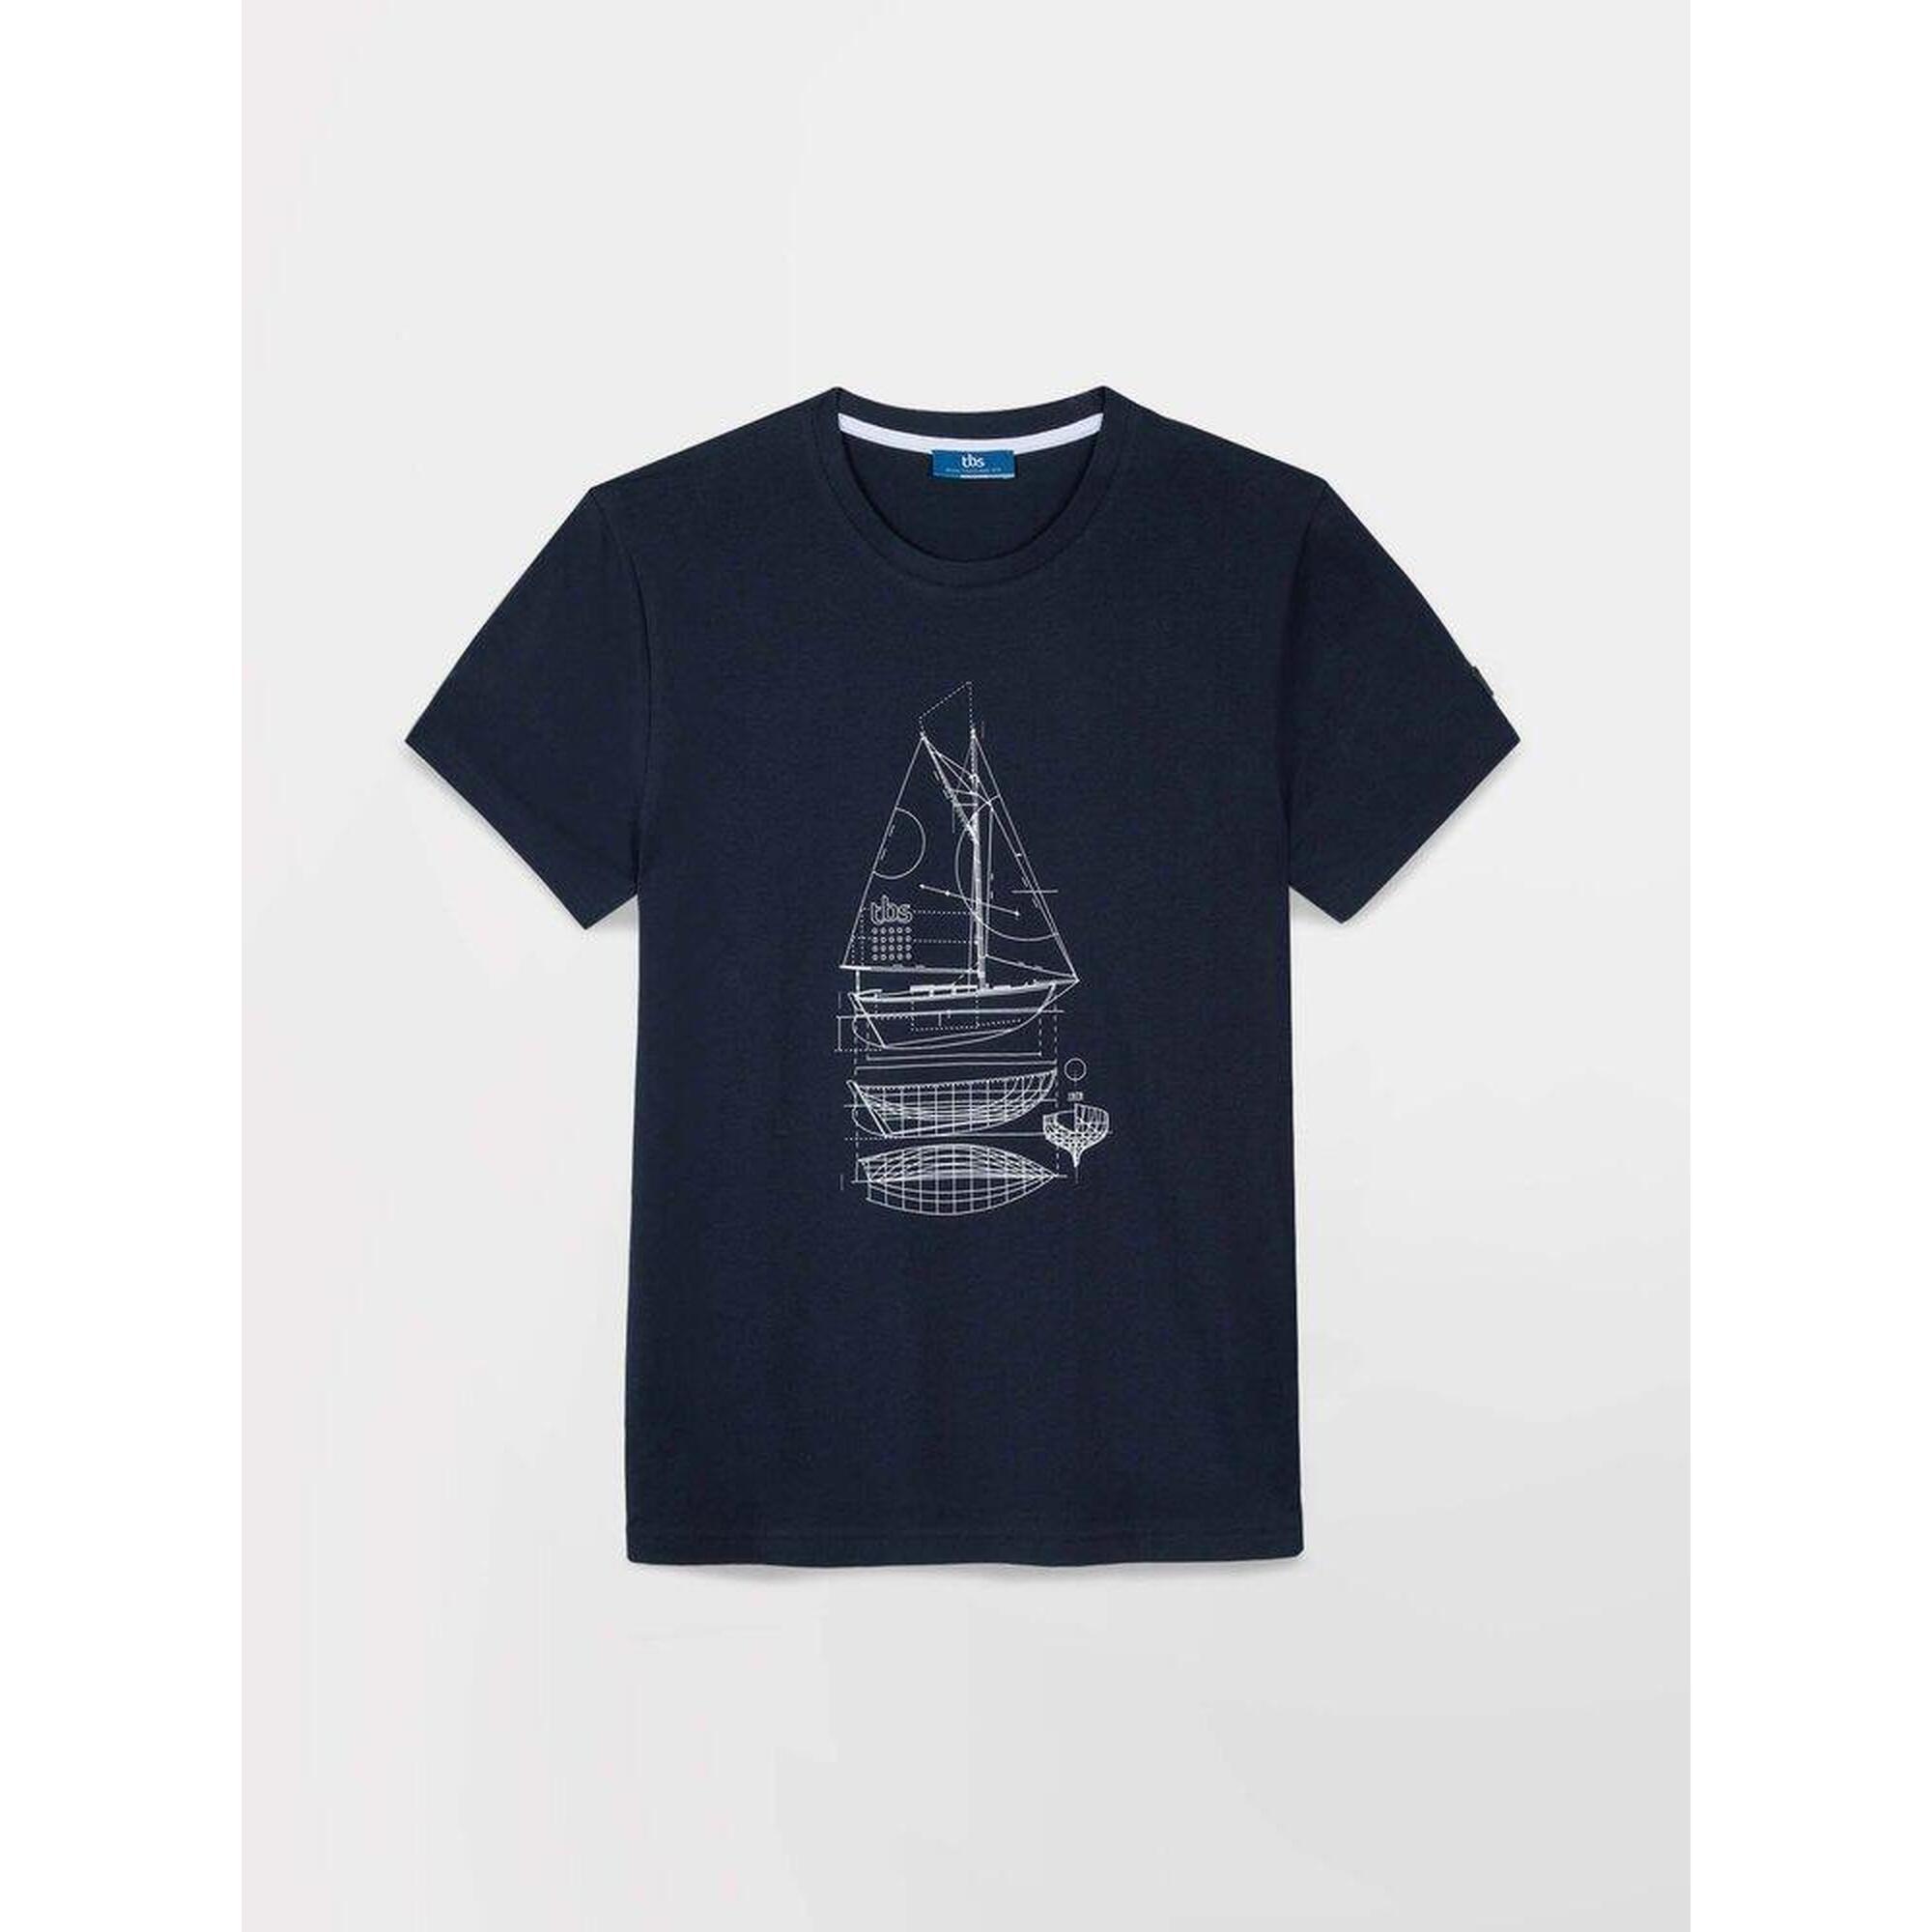 T-shirt manches courtes Homme - DANTETEE Navy